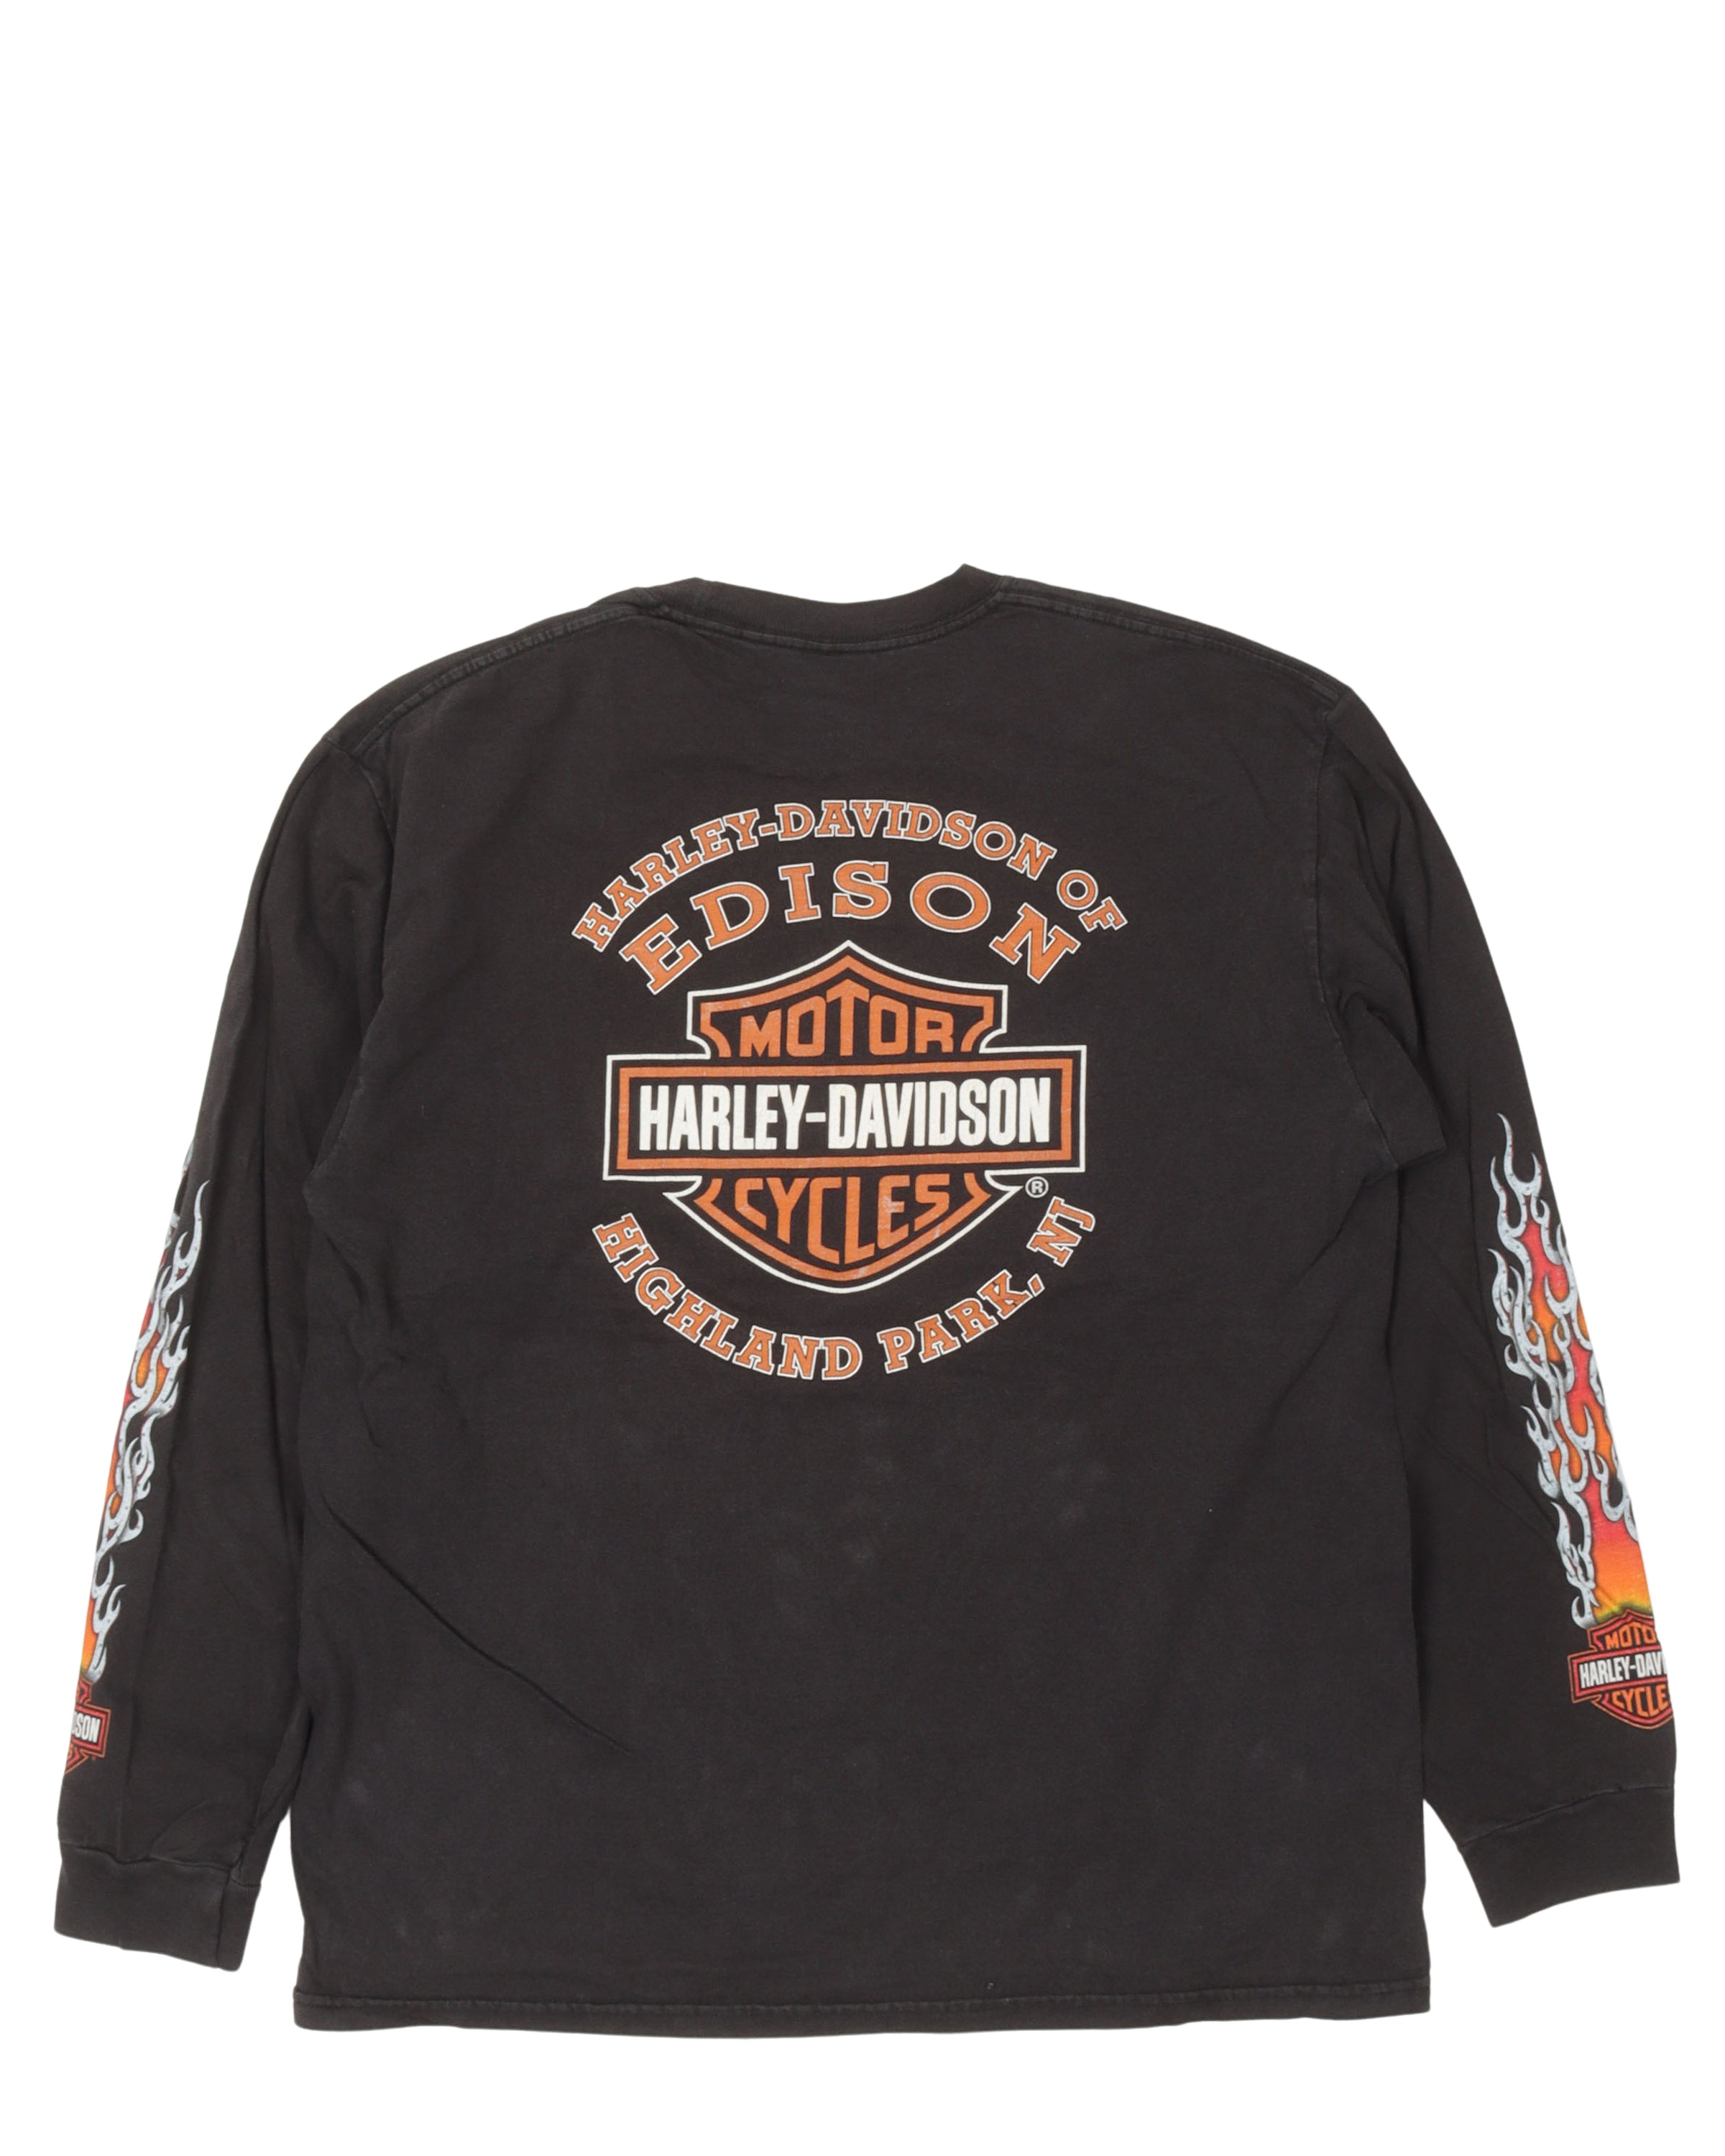 Harley Davidson Flames Long Sleeve T-Shirt